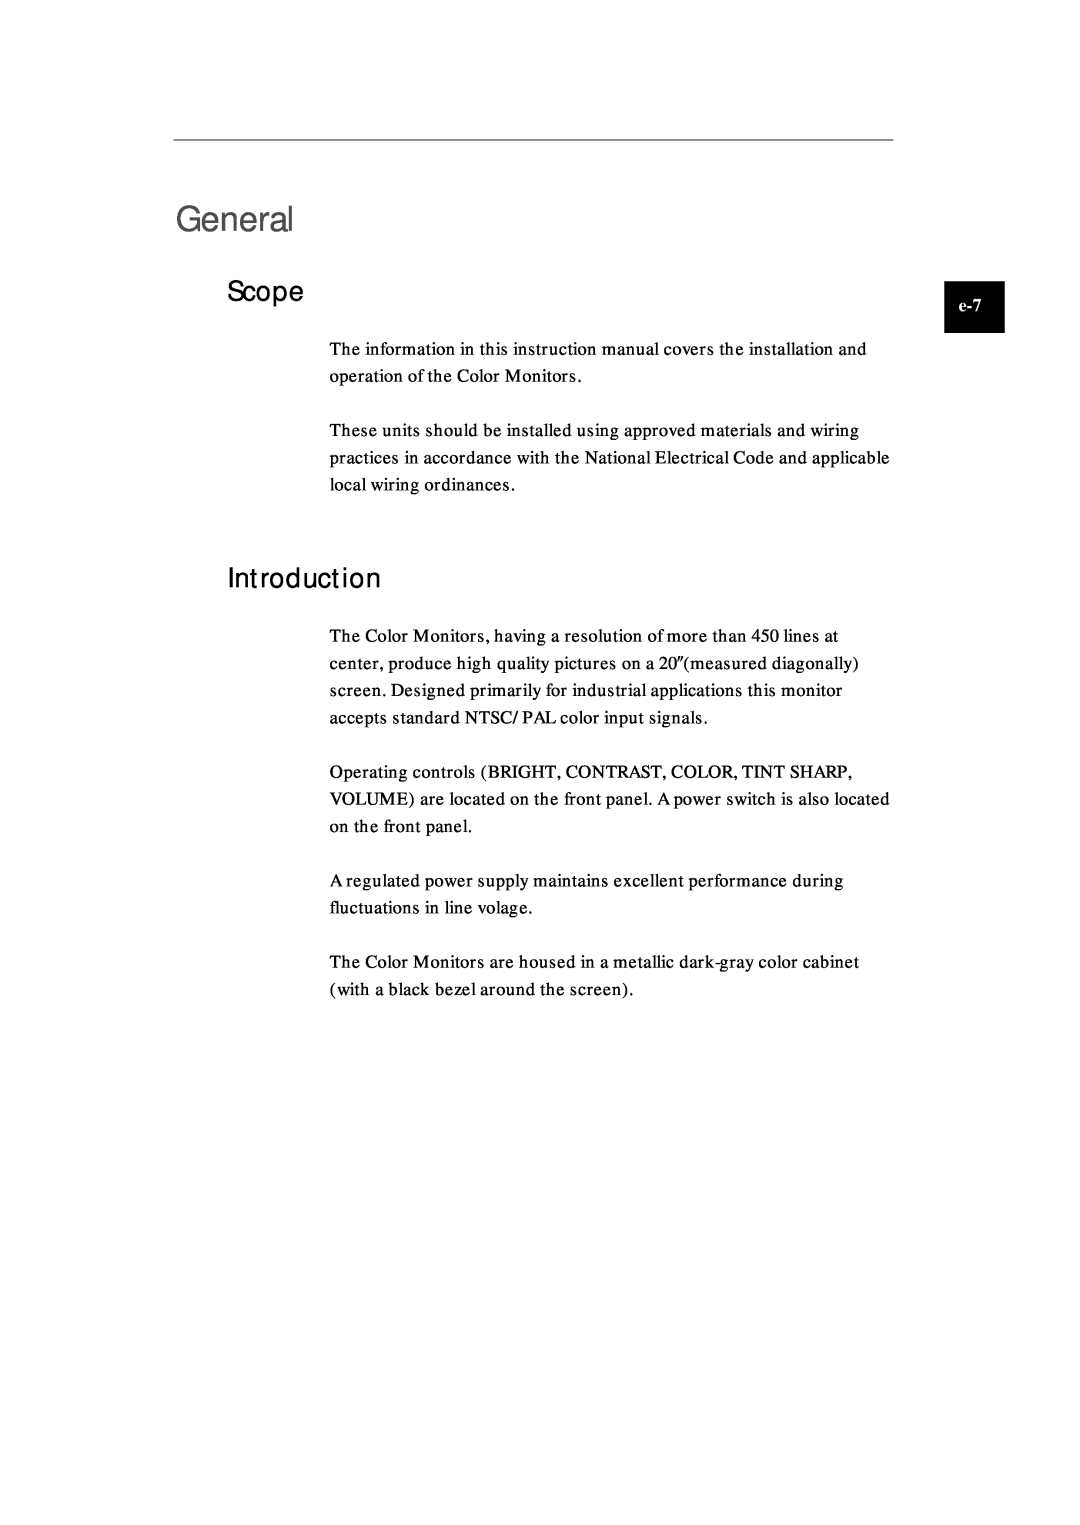 Samsung SMC-210AP manual General, Scope, Introduction 